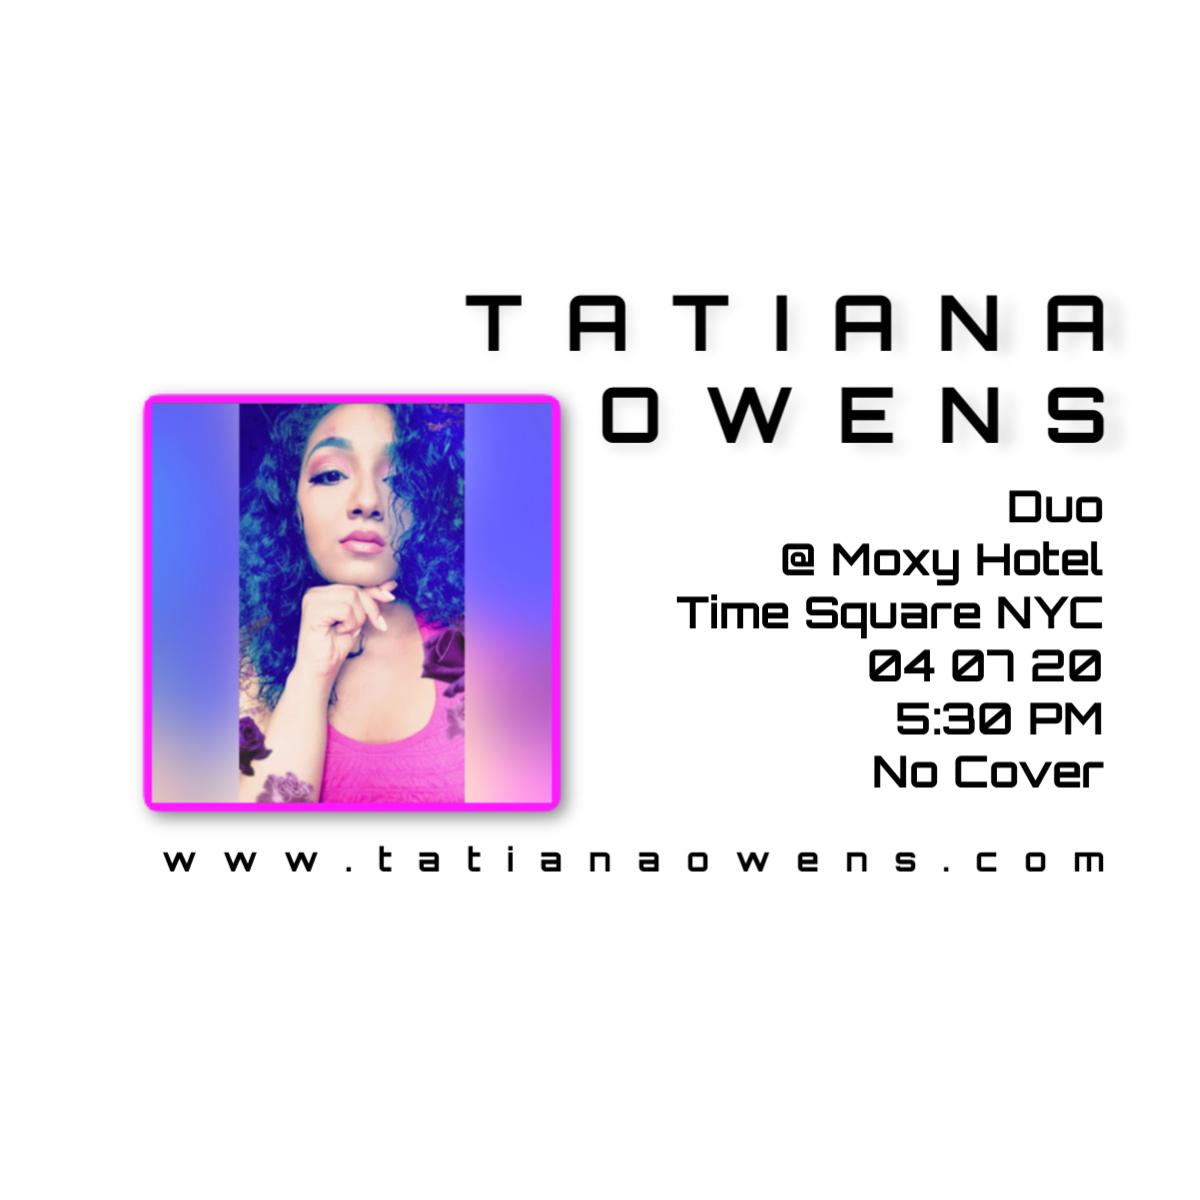 Tatiana Owens at The Moxy Hotel, Times Square NYC